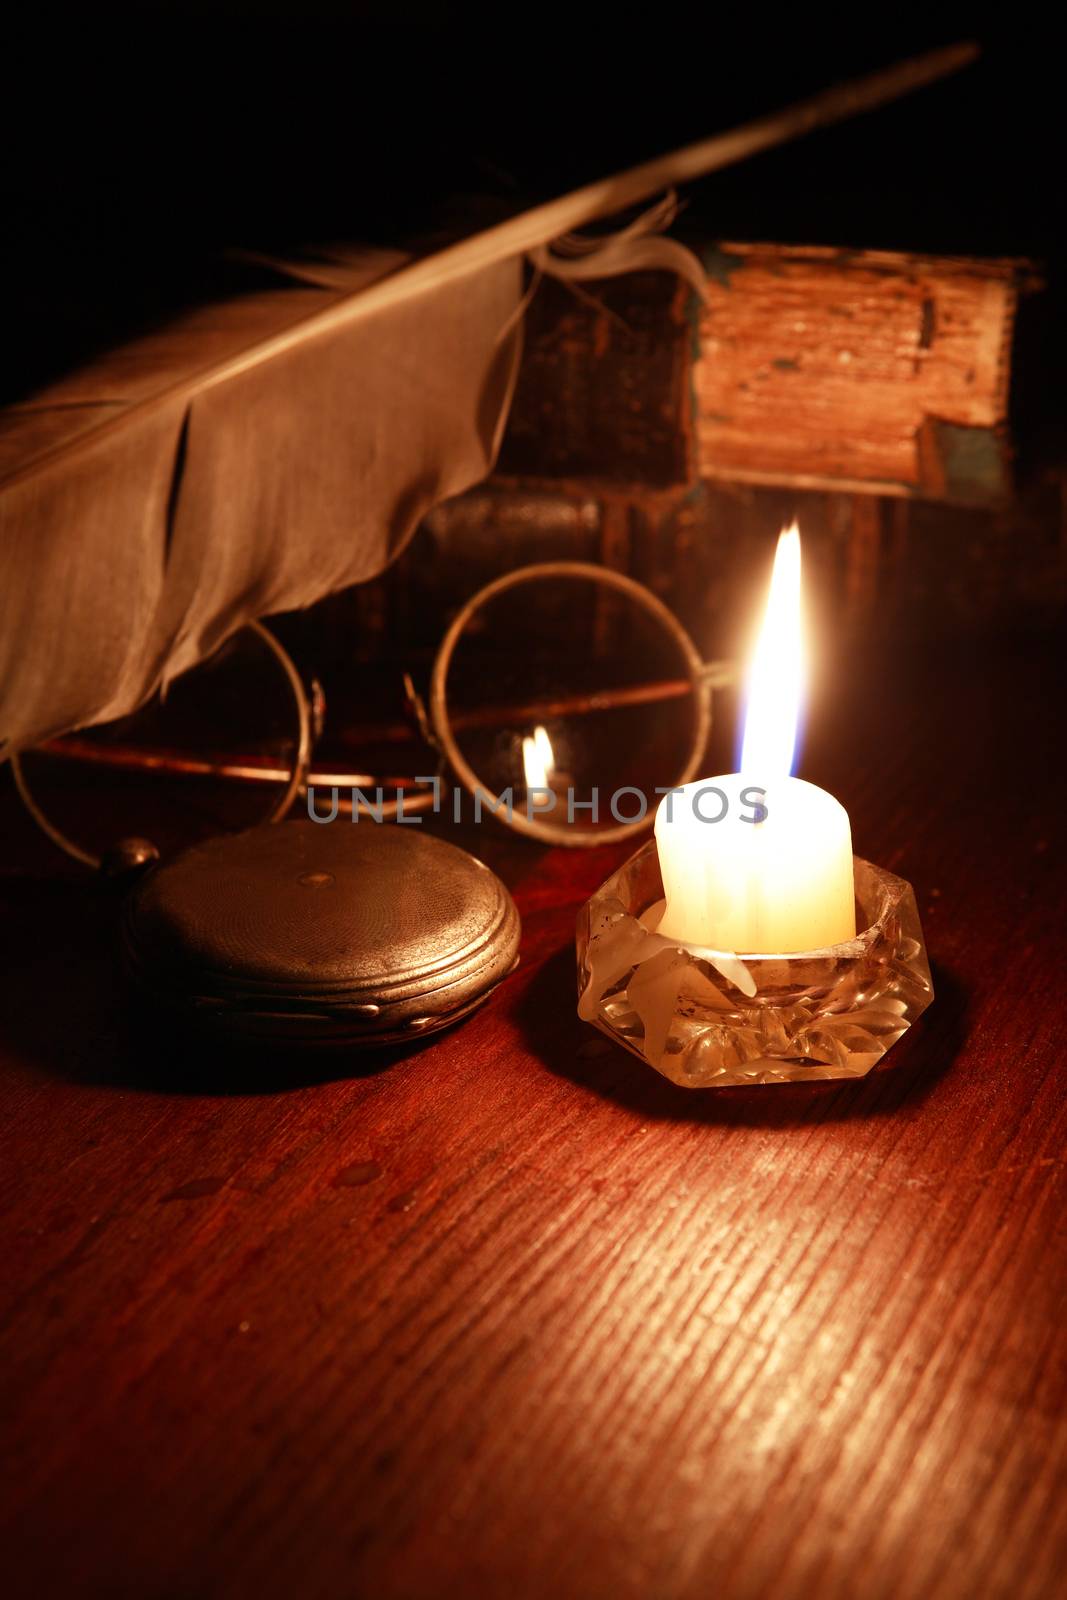 Lighting Candle Near Clock by kvkirillov